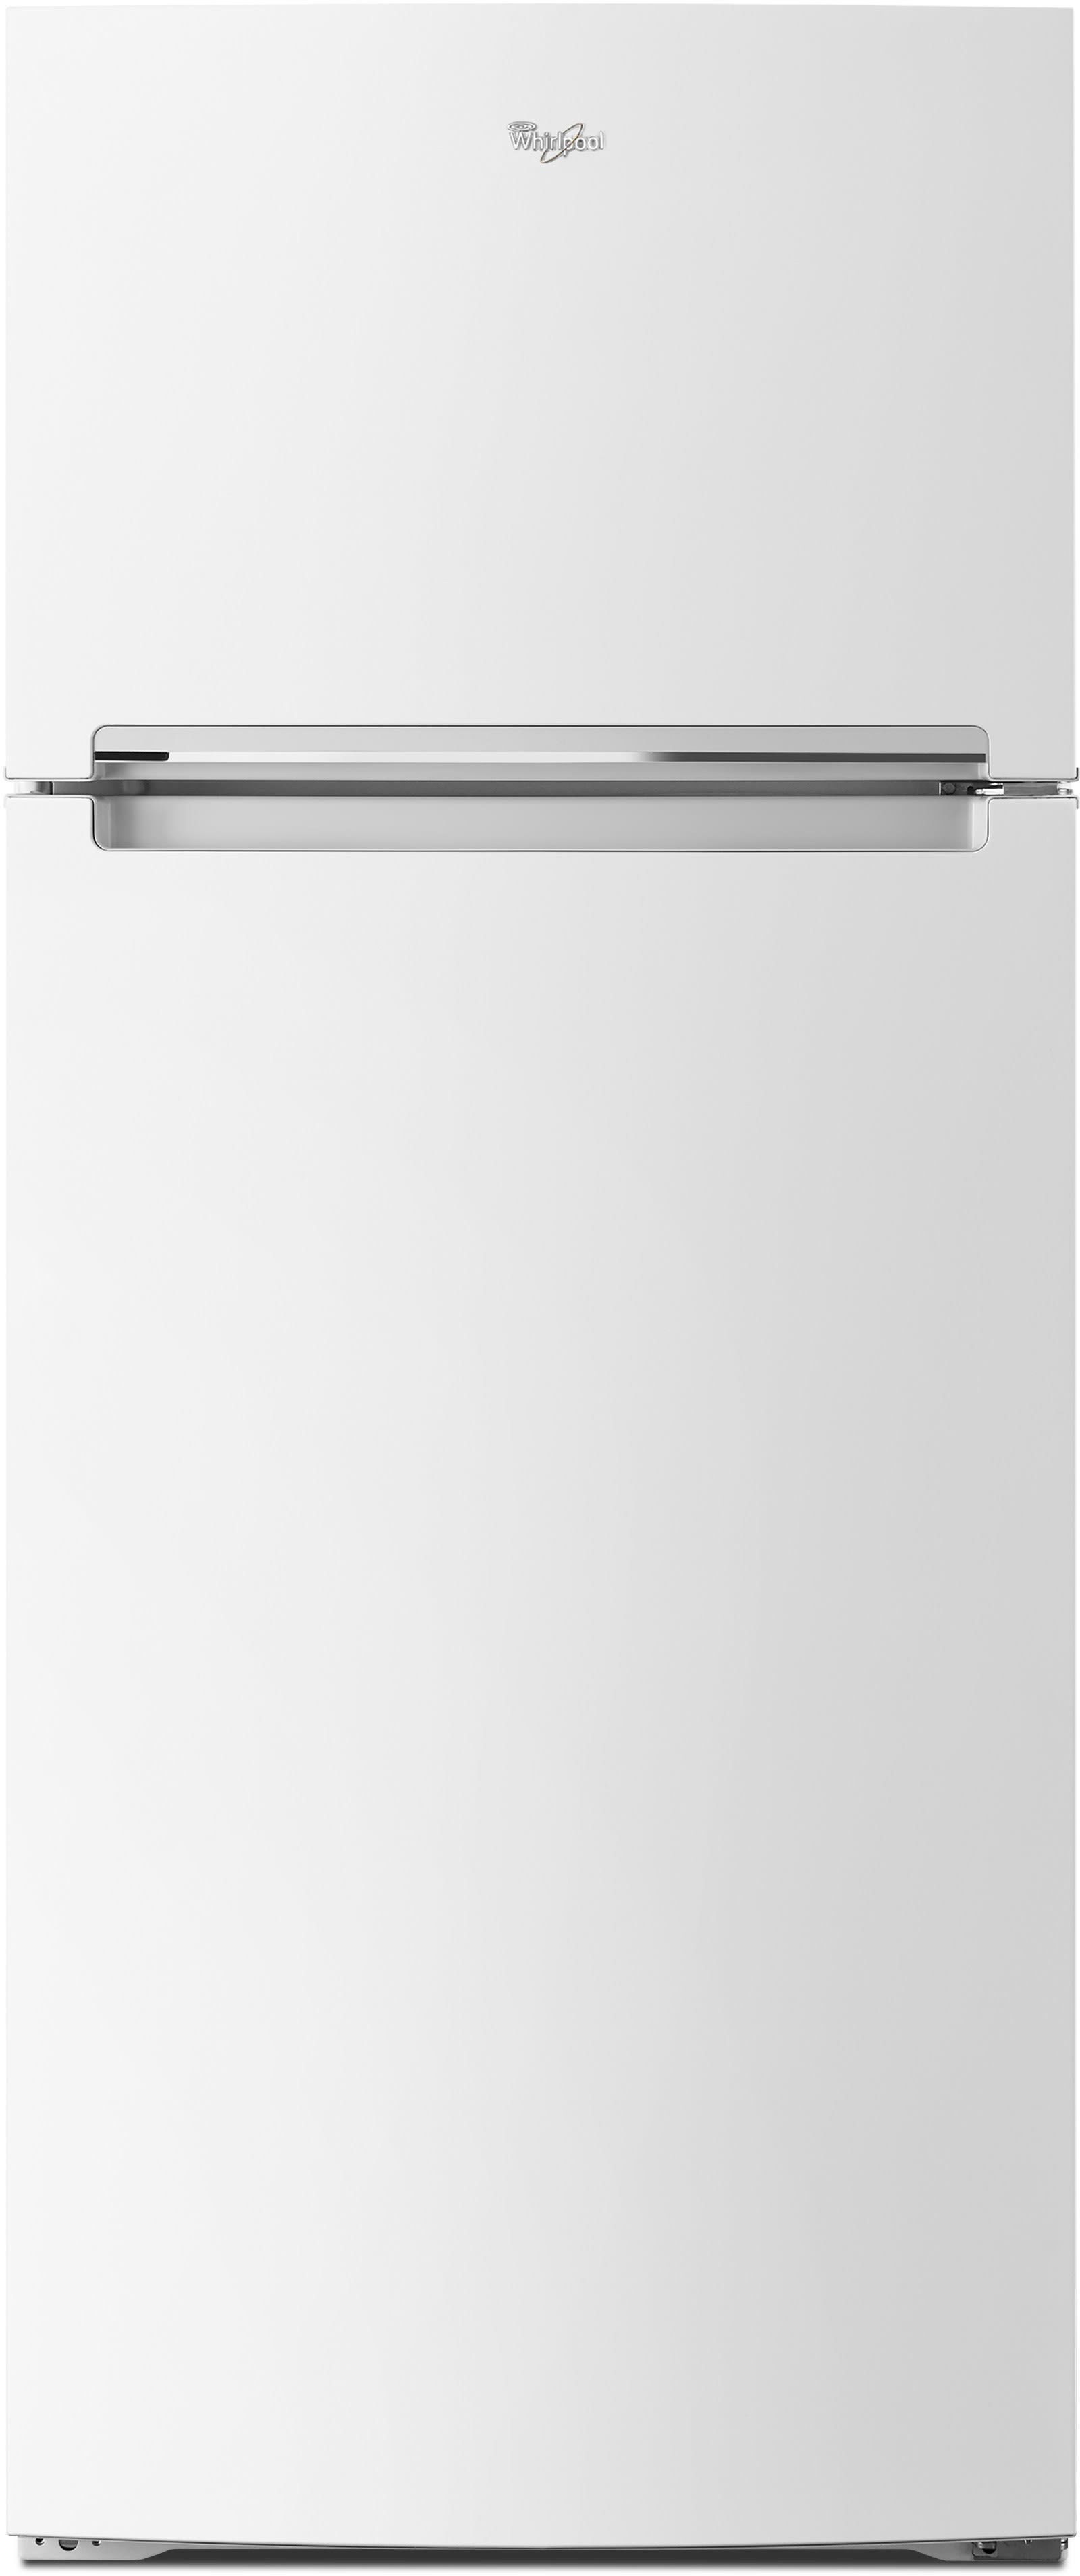 28 Inch Top Freezer Refrigerator